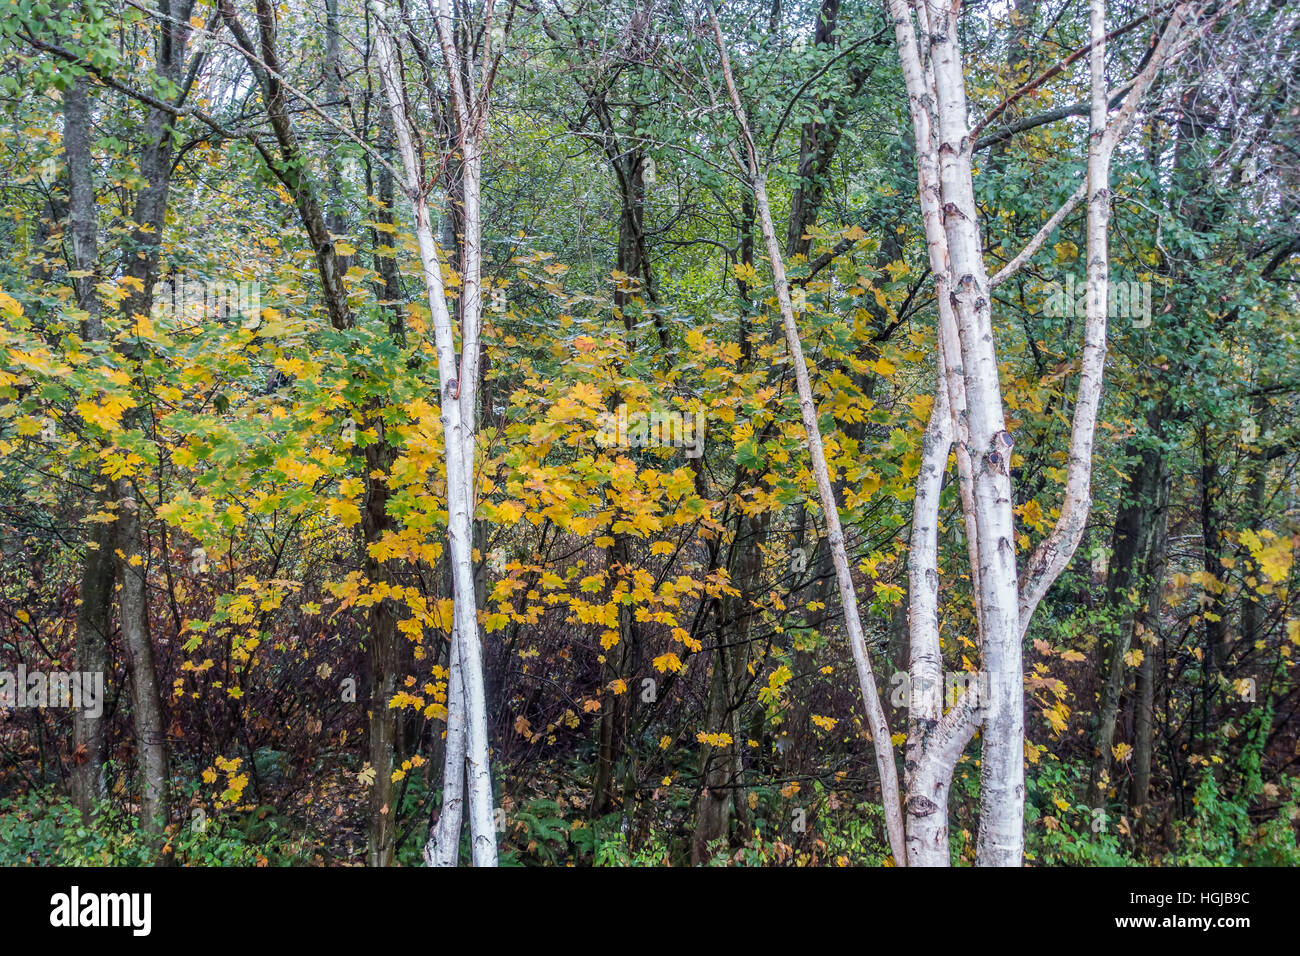 White Aspen trees grow in front of fall foliage at Seahurst Park in Burien, Washington. Stock Photo